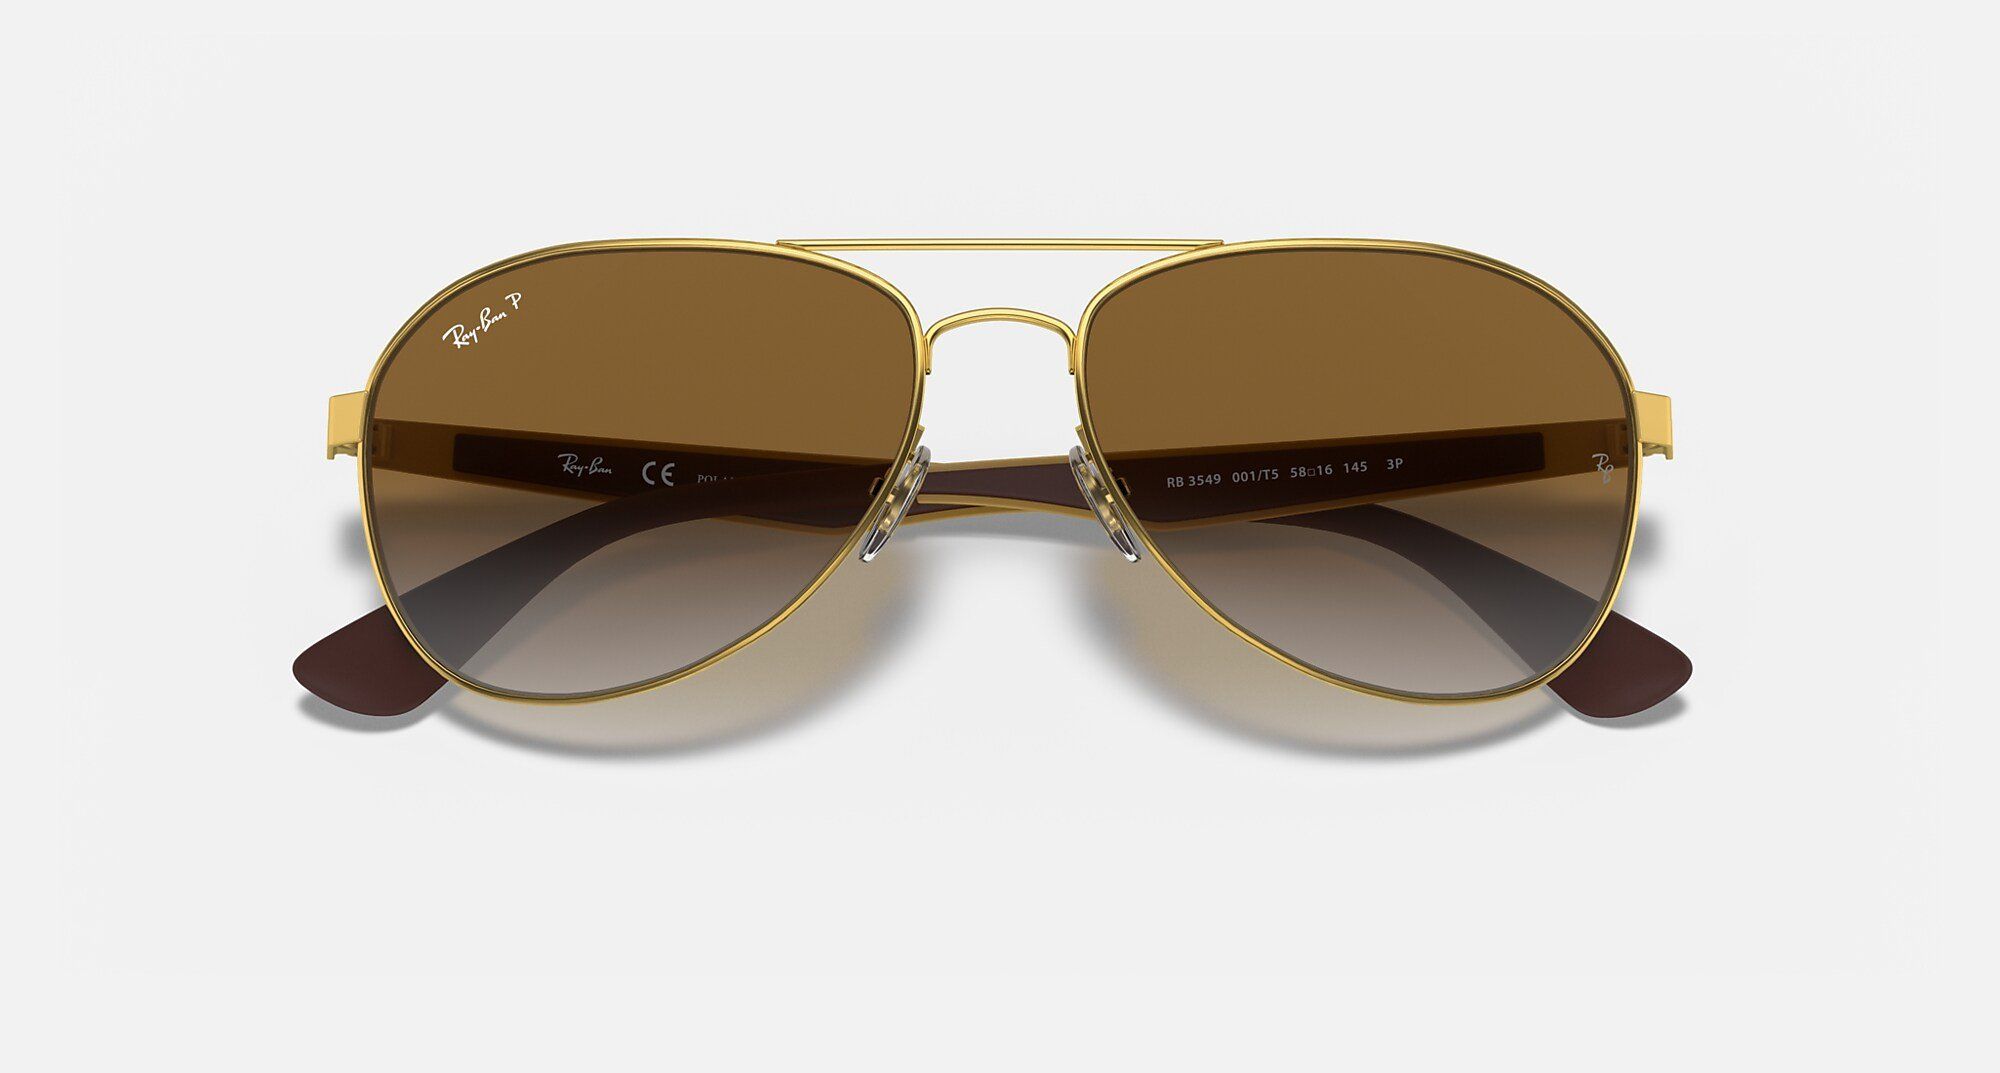  Ray Ban RB3549 001/T5 polarized sunglasses 